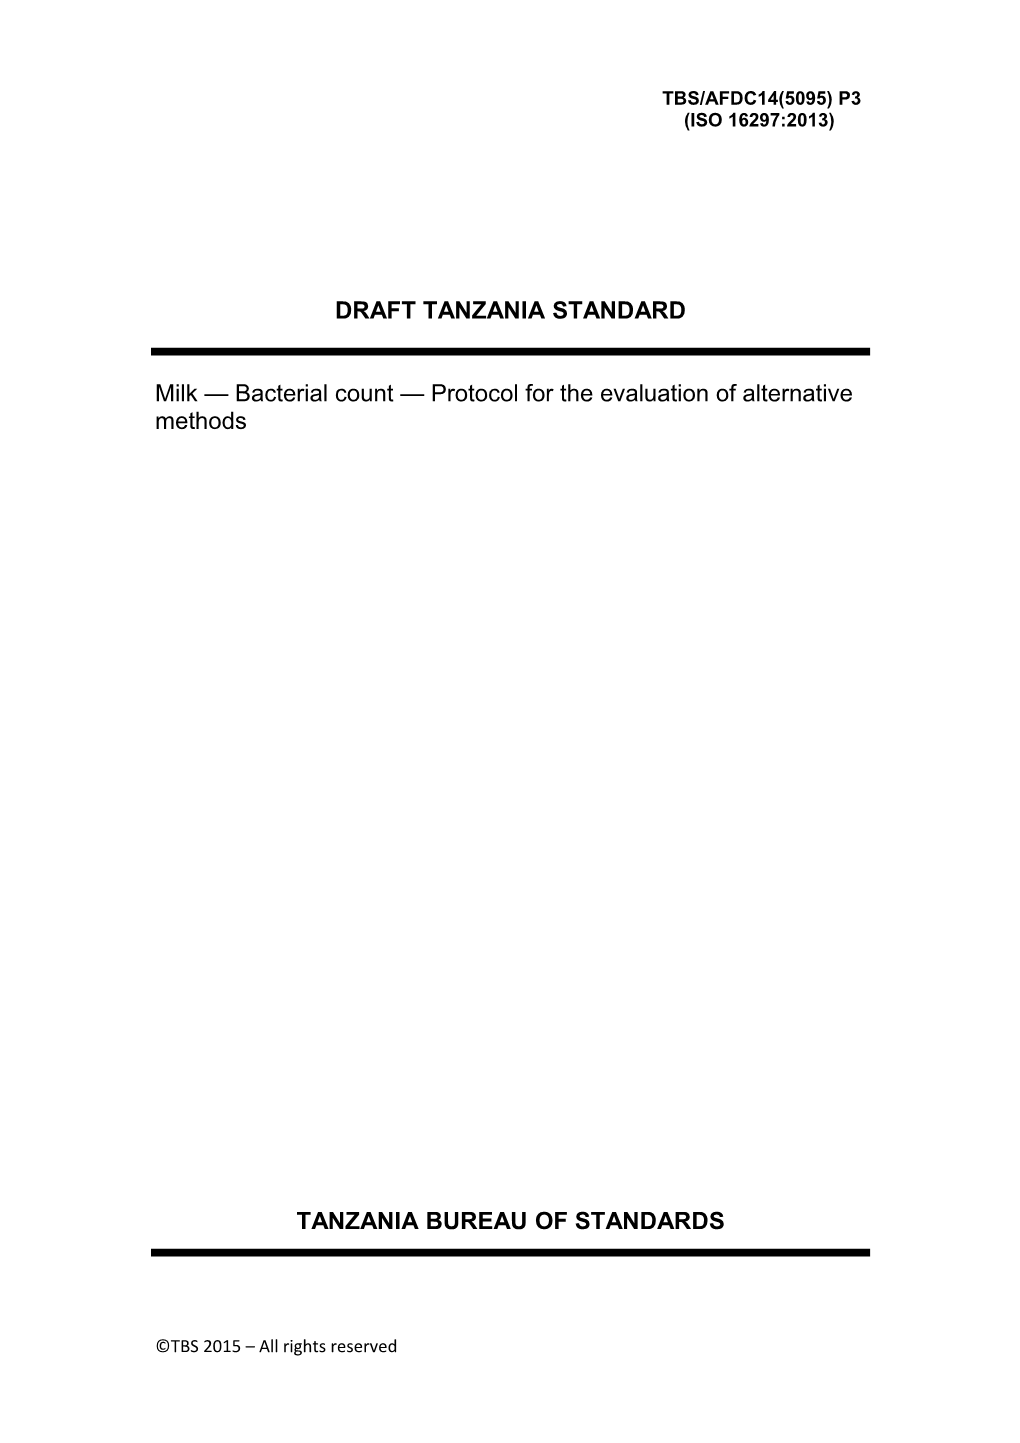 Draft Tanzania Standard